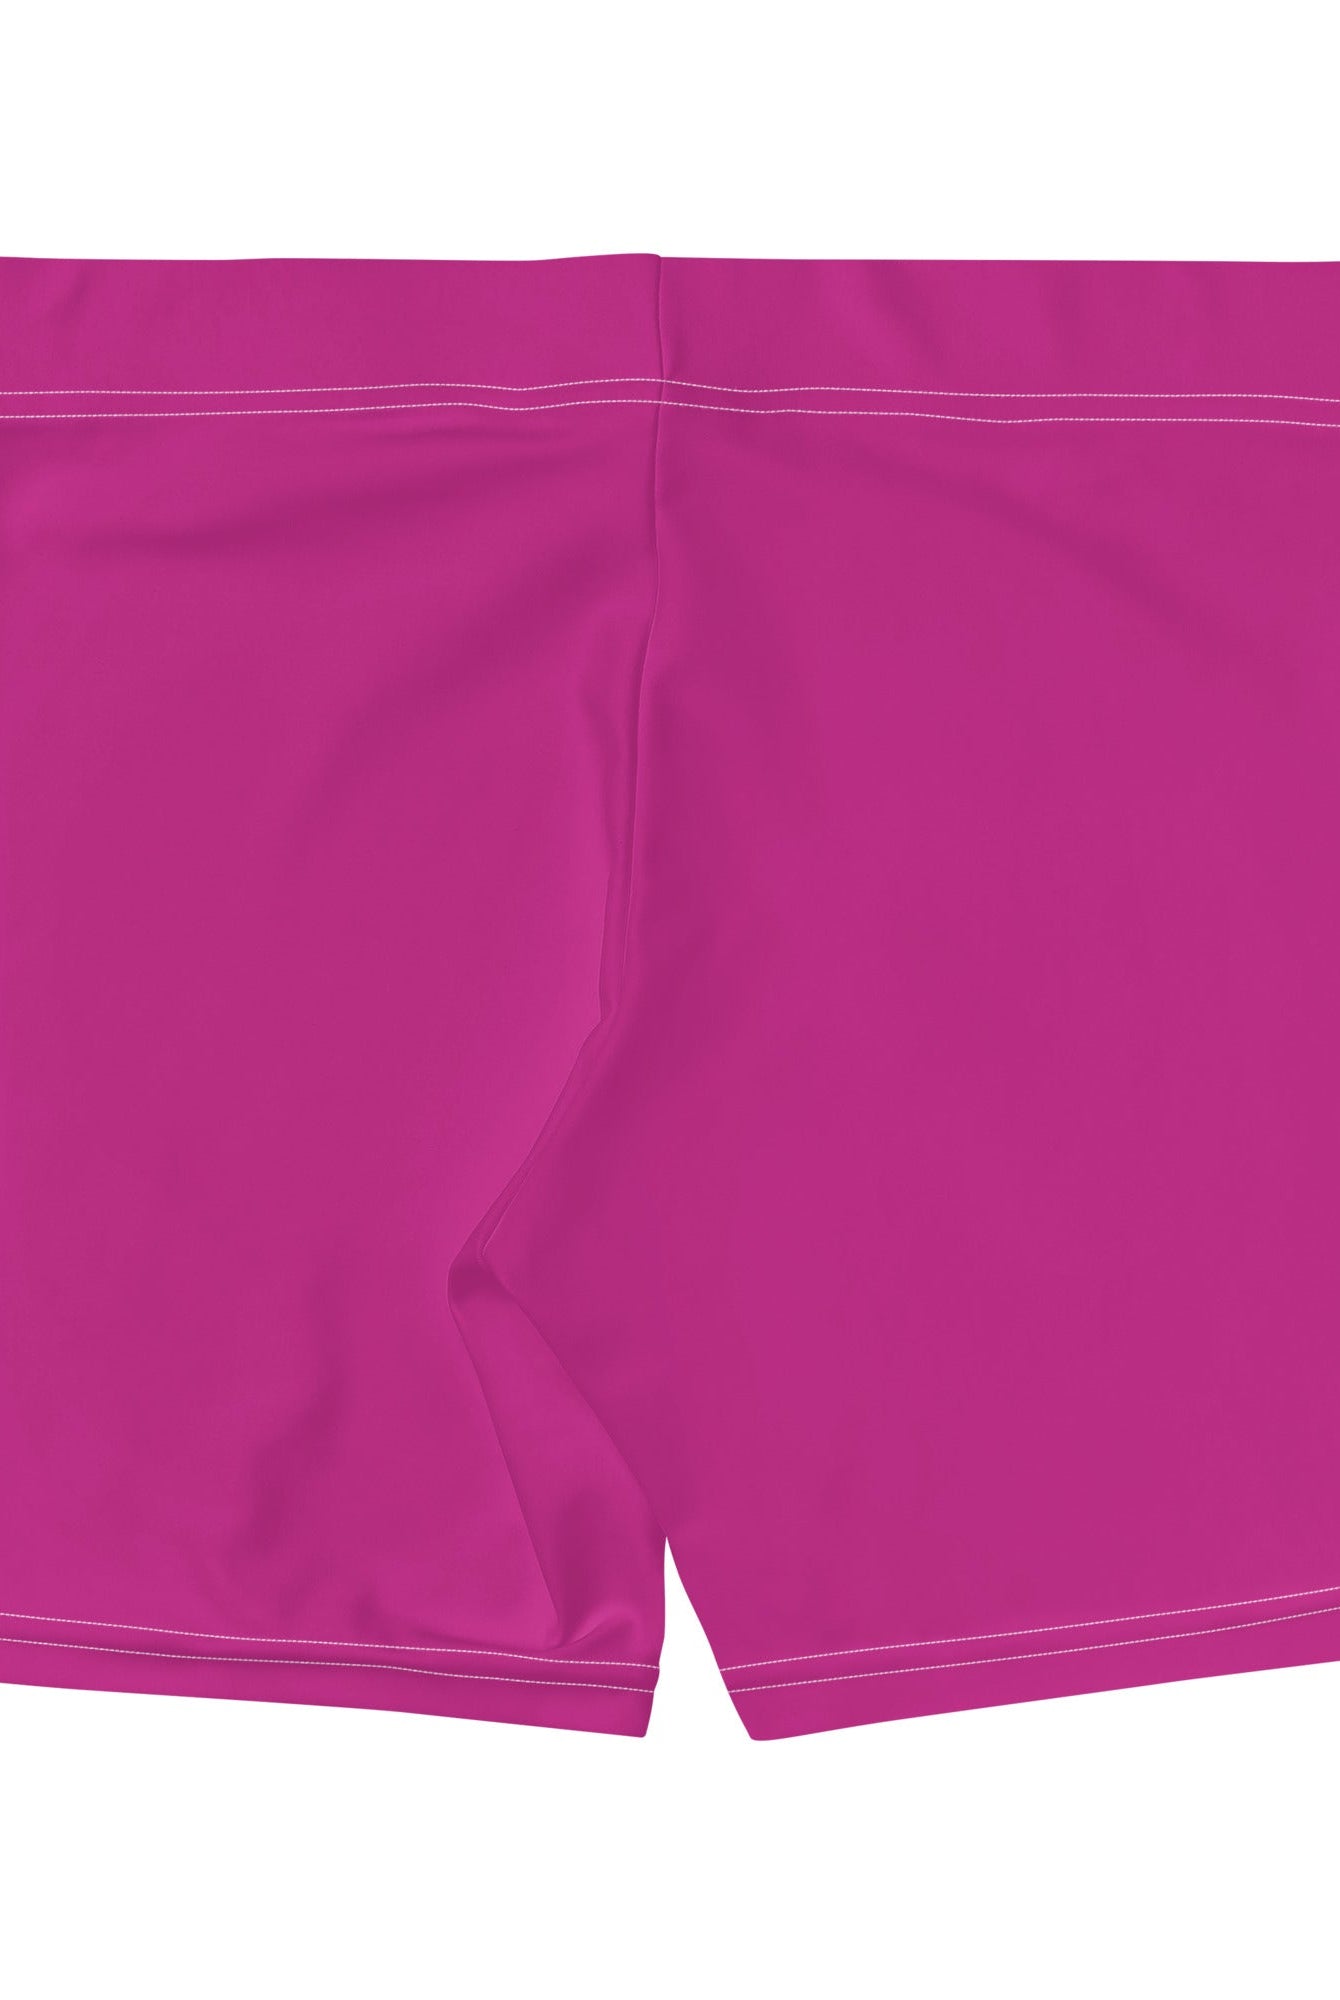 Medium Red Violet Gym Shorts - Women's Gym Shorts - DRAGON FOXX™ - Medium Red Violet Gym Shorts - 1695073_9296 - XS - Medium Red Violet - Gym Shorts - Dragon Foxx™ - Dragon Foxx™ Gym Shorts - Dragon Foxx™ Medium Red Violet Gym Shorts